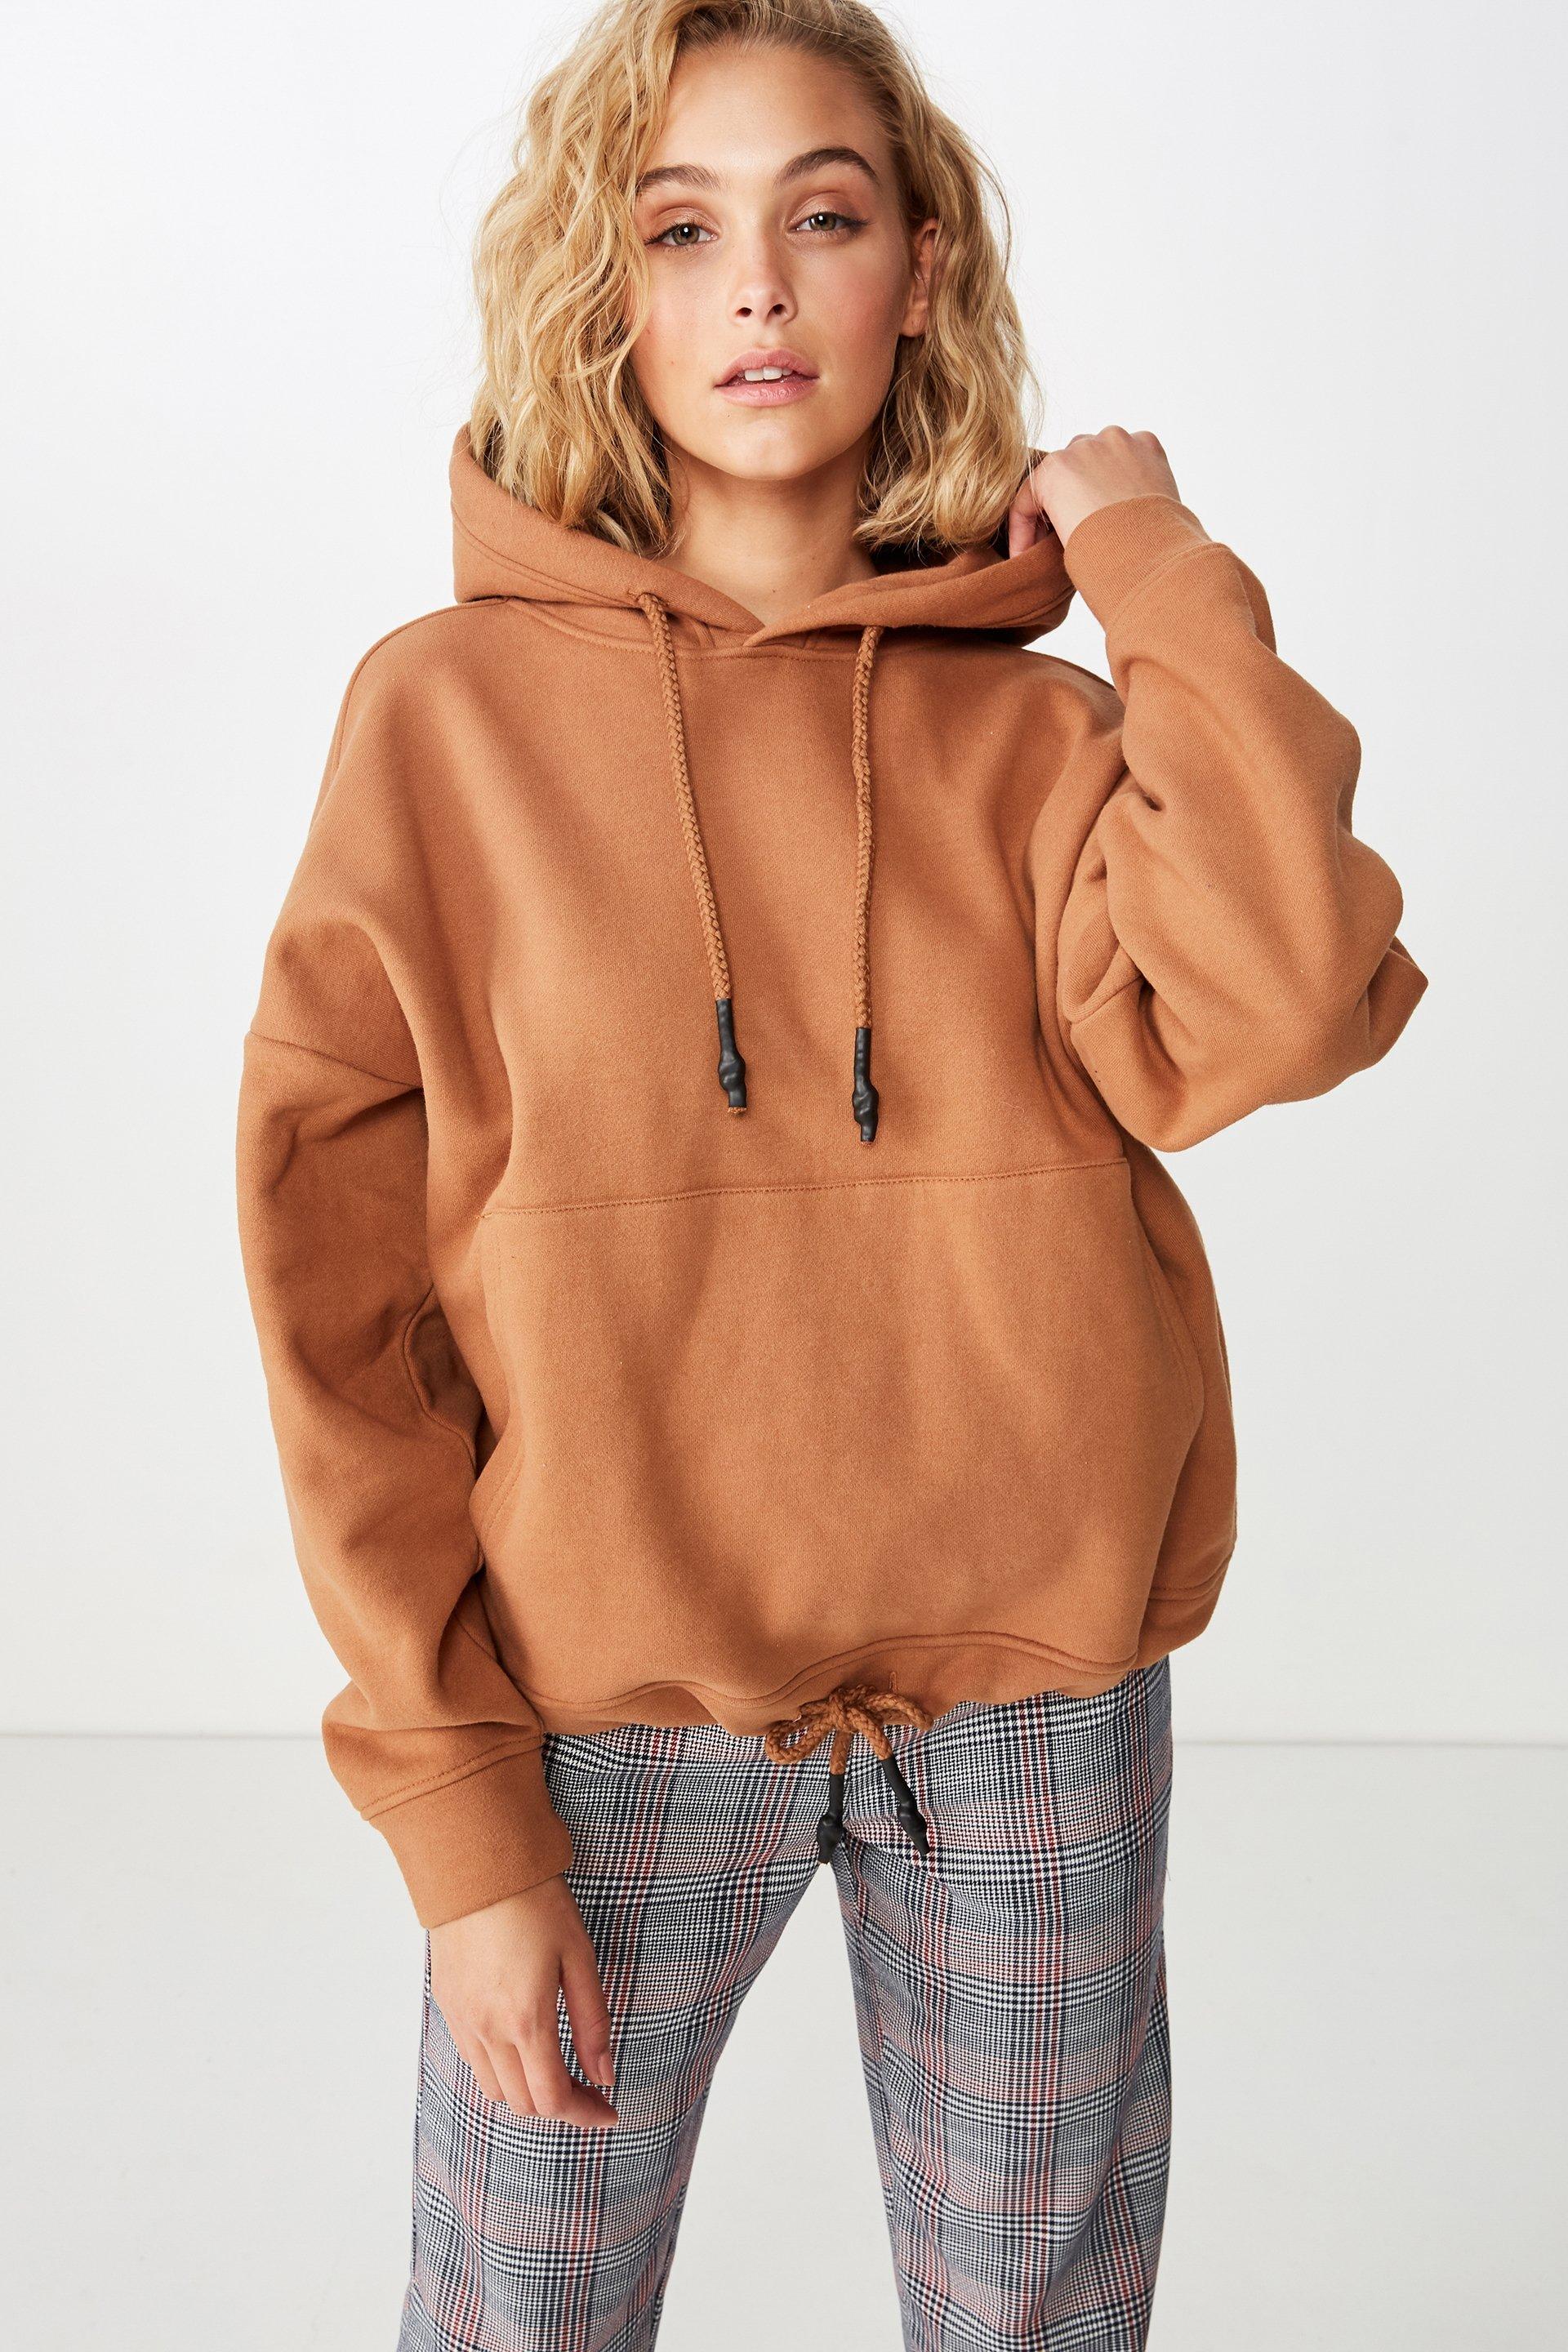 Maxie oversized hoodie - caramel tan Cotton On Hoodies & Sweats